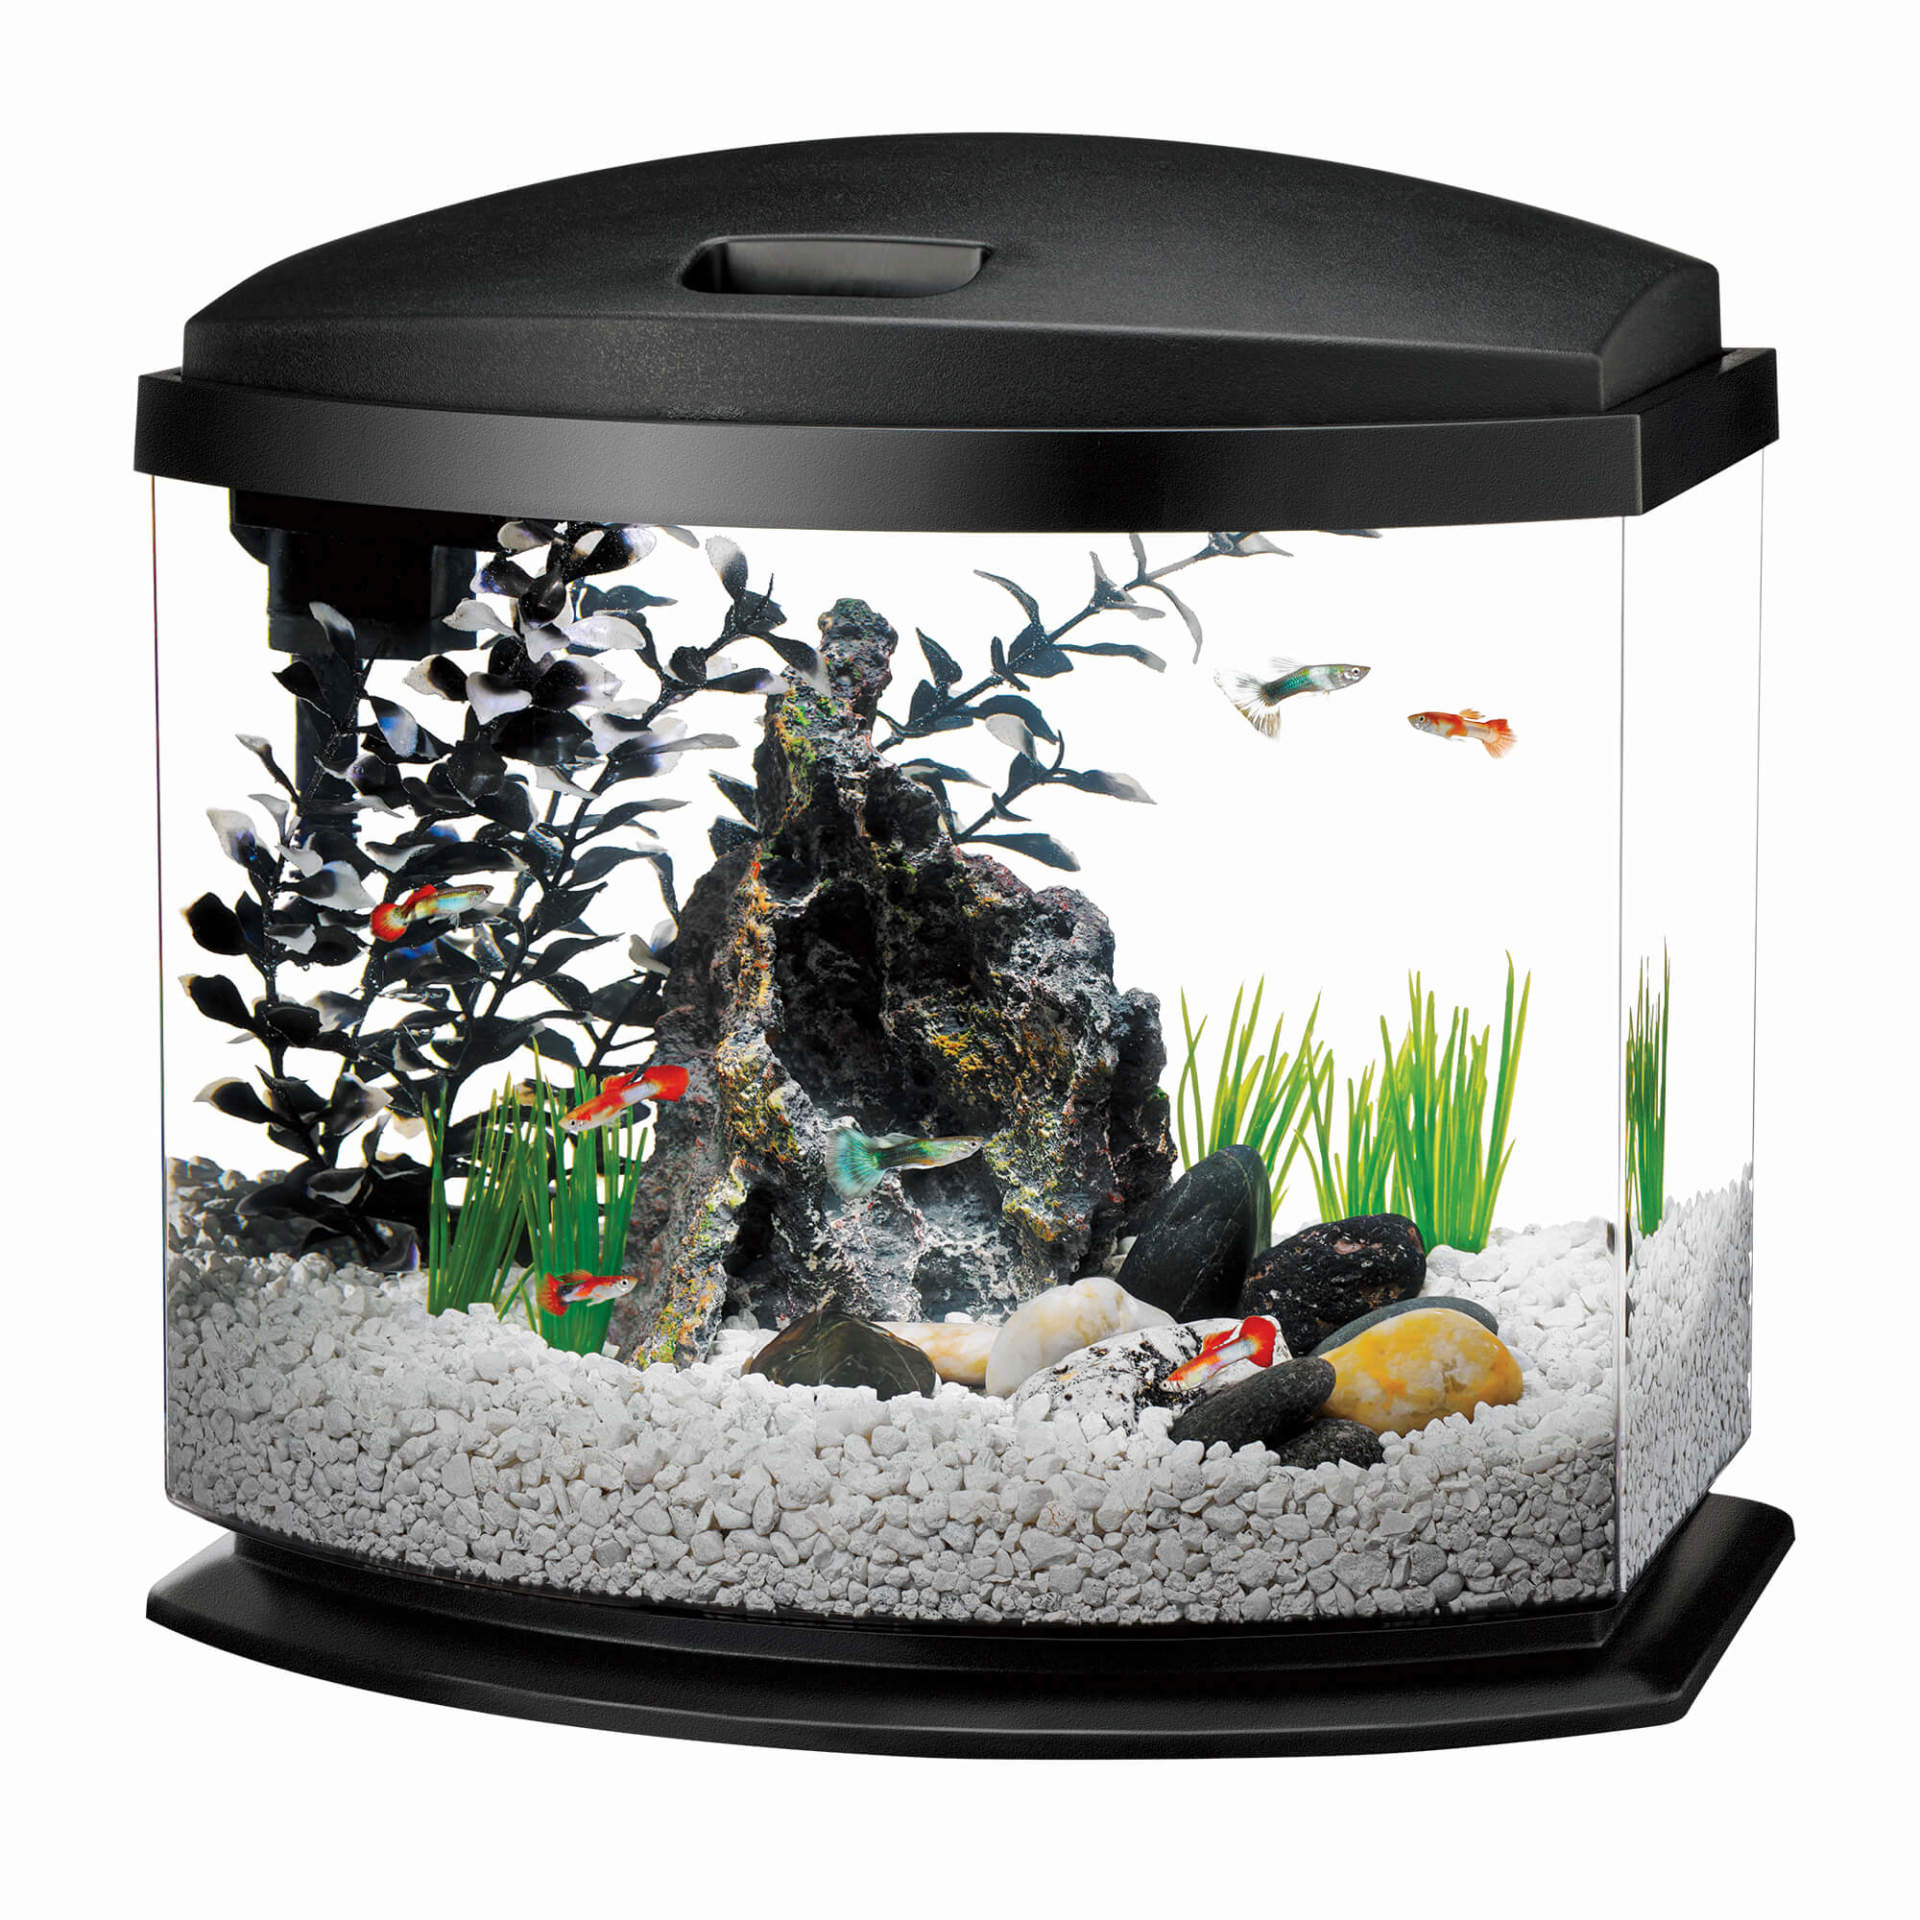 Aqueon MiniBow LED Aquarium Kit 1 Gallon Black